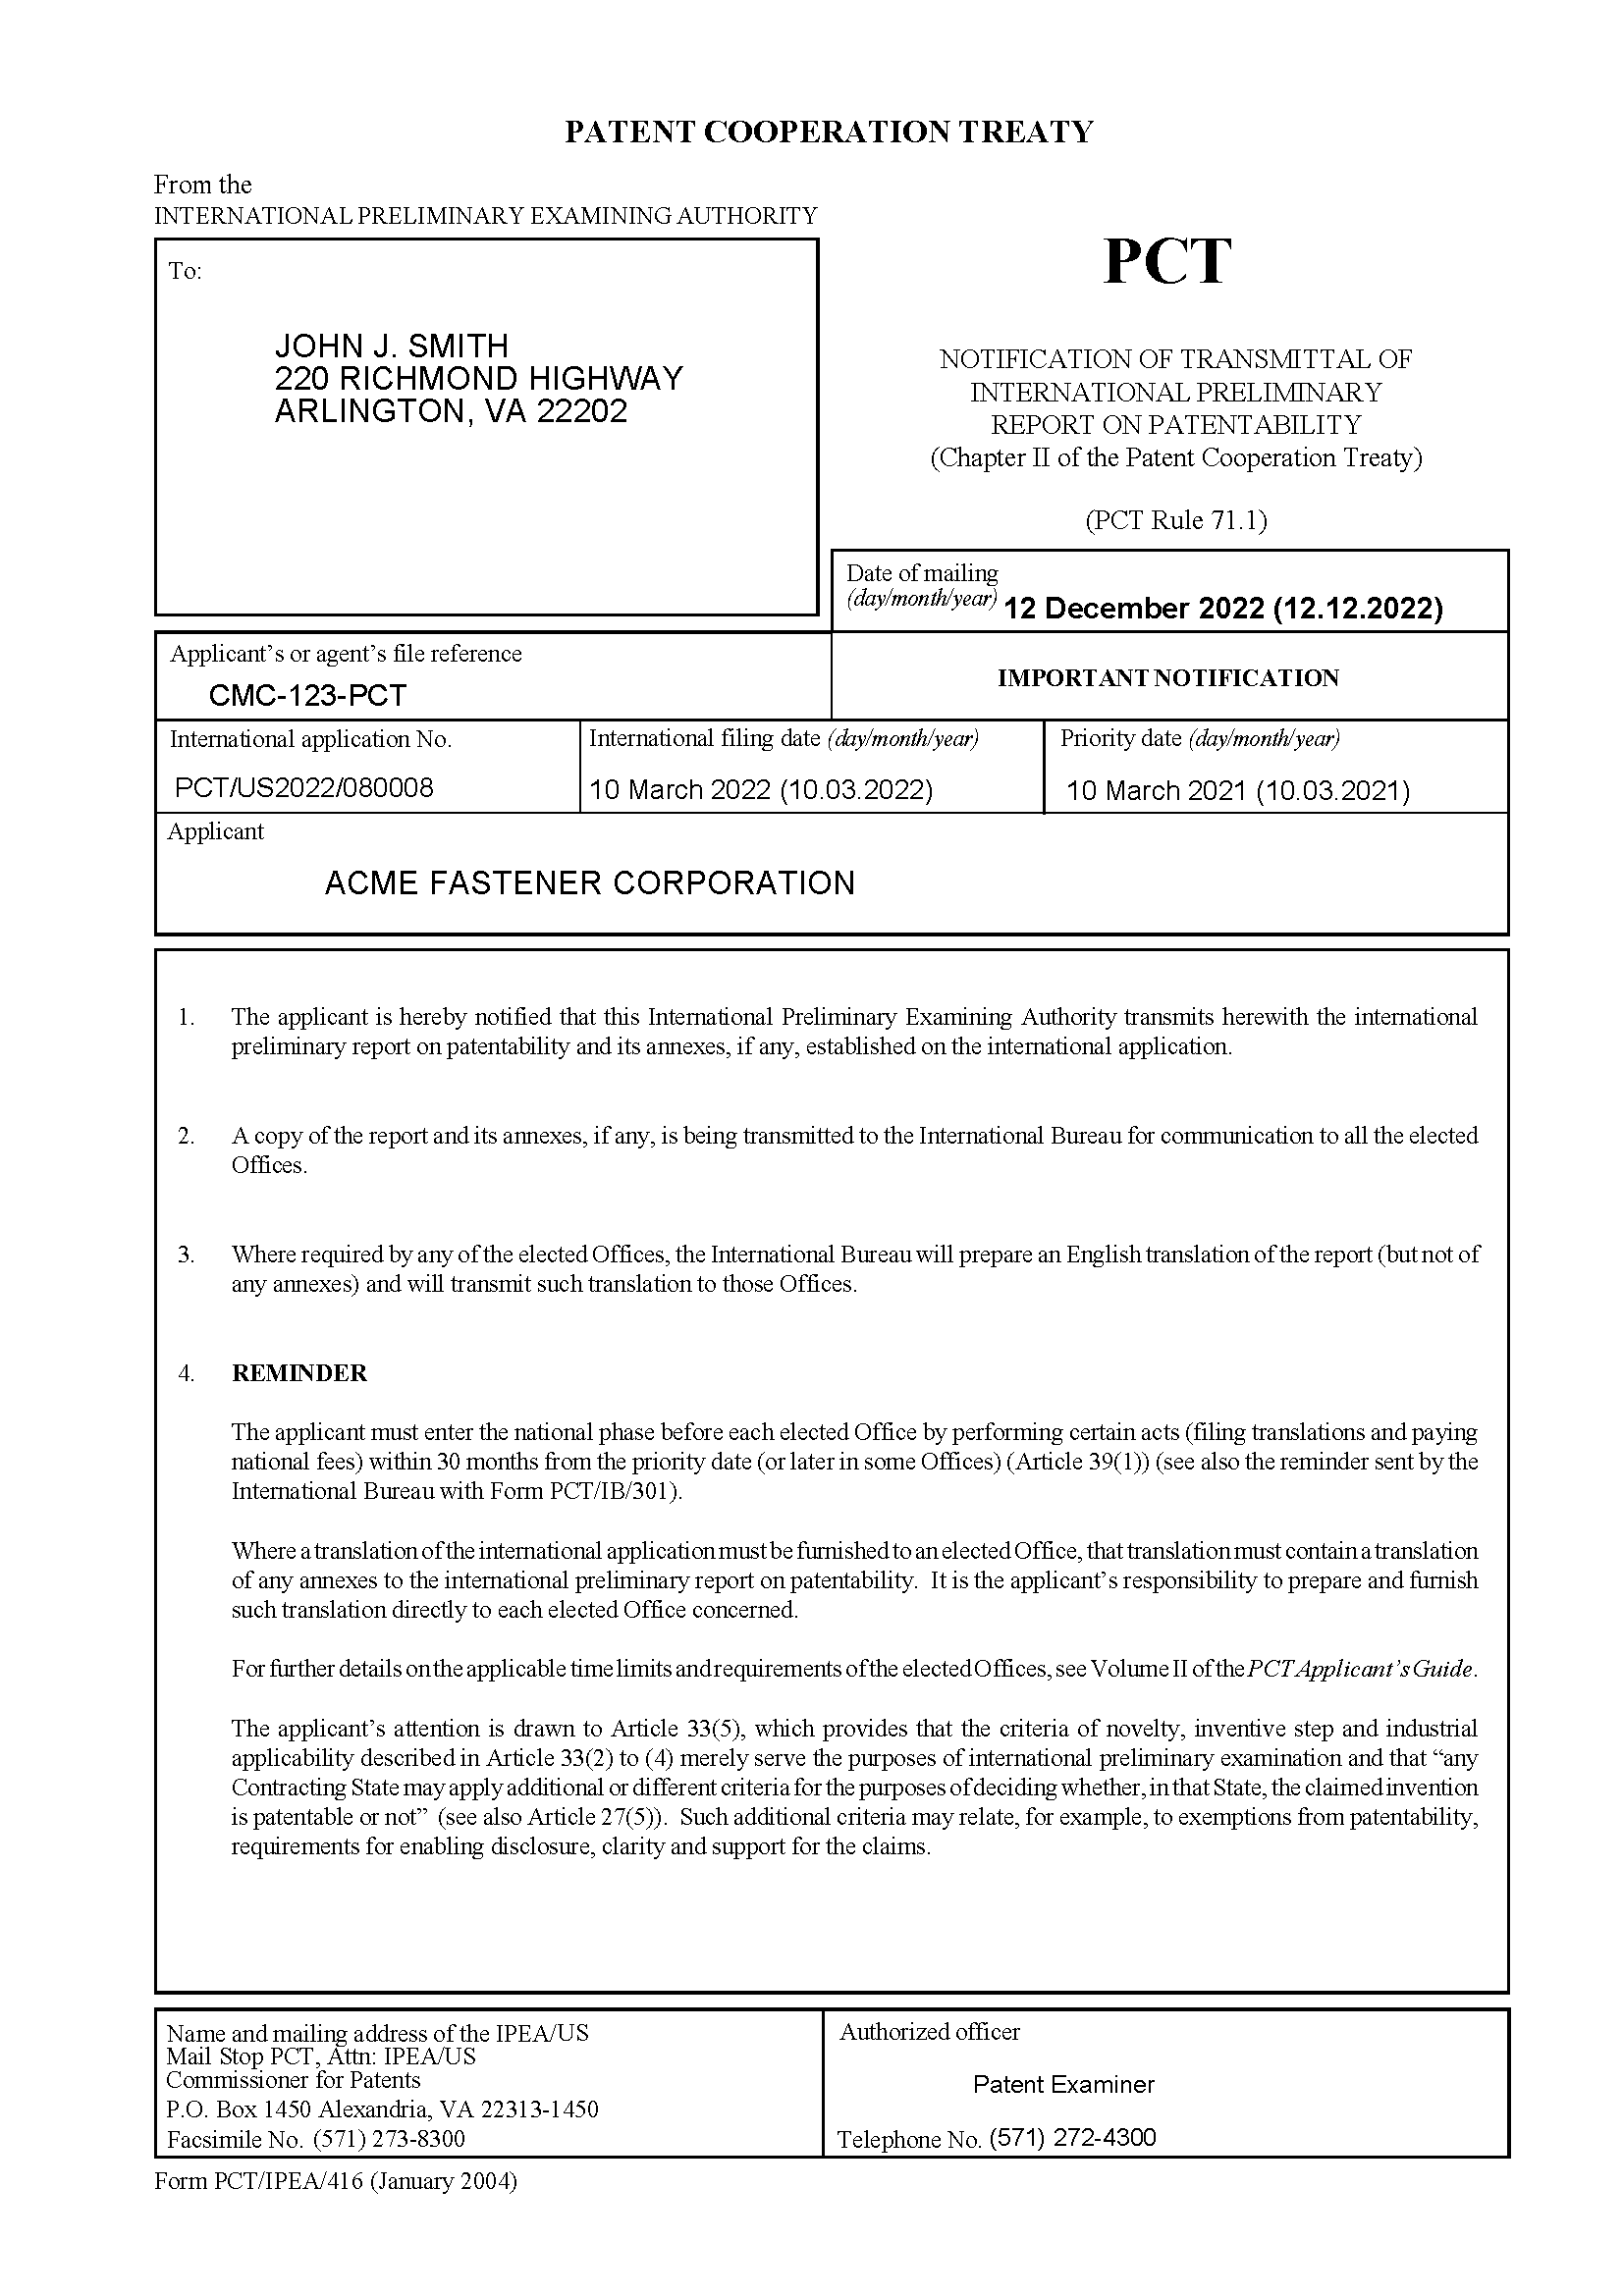 Form PCT/IPEA/416 (January 2004 version)